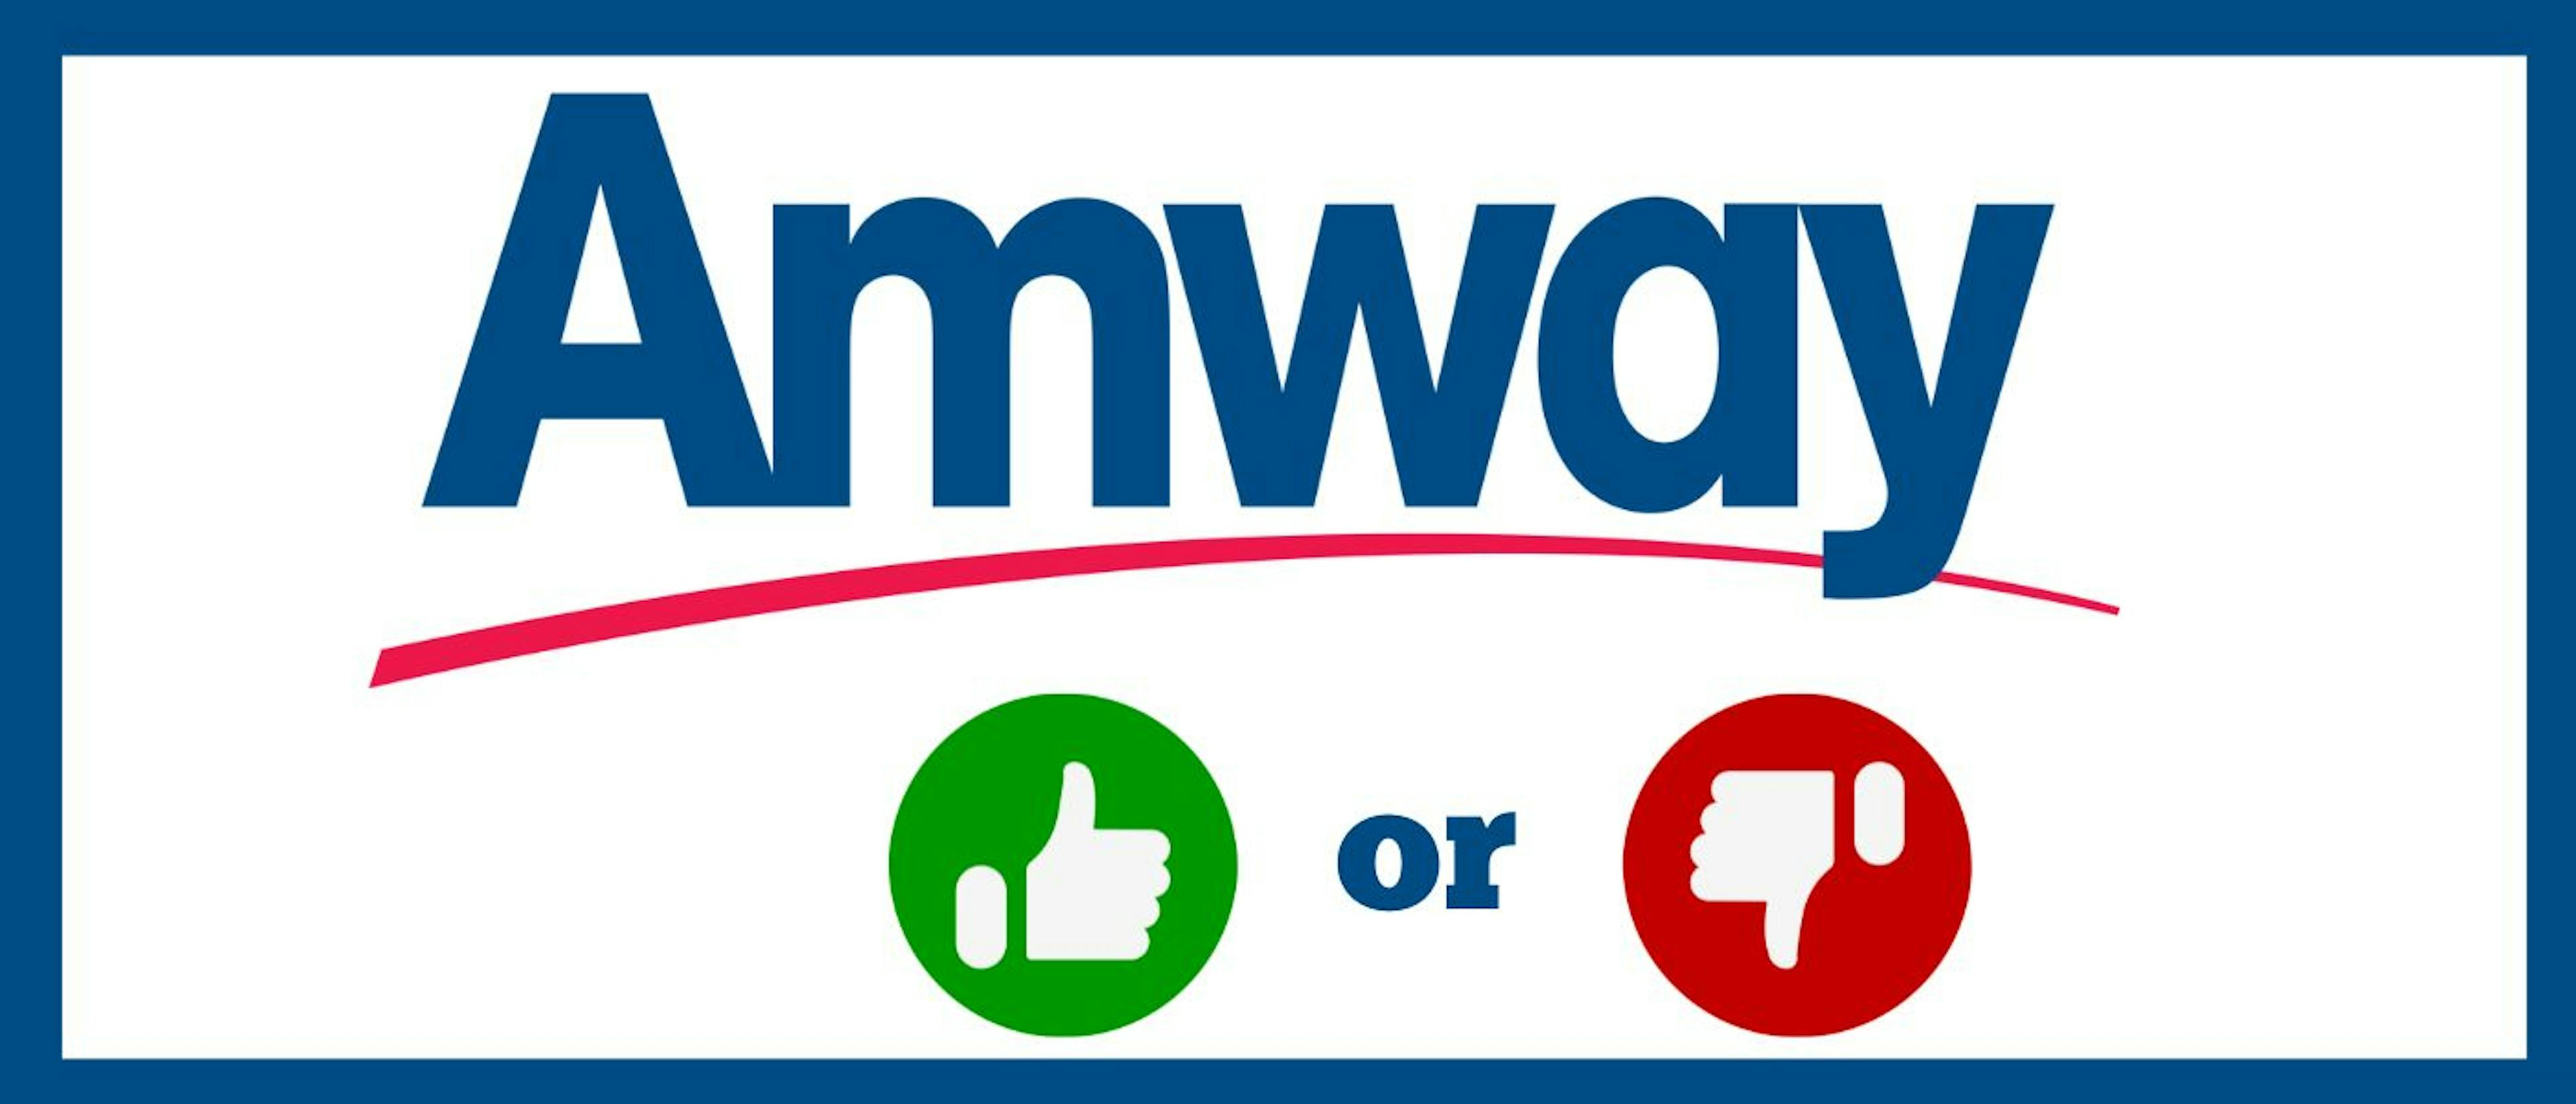 featured image - Amway : système pyramidal ou opportunité commerciale légitime ?